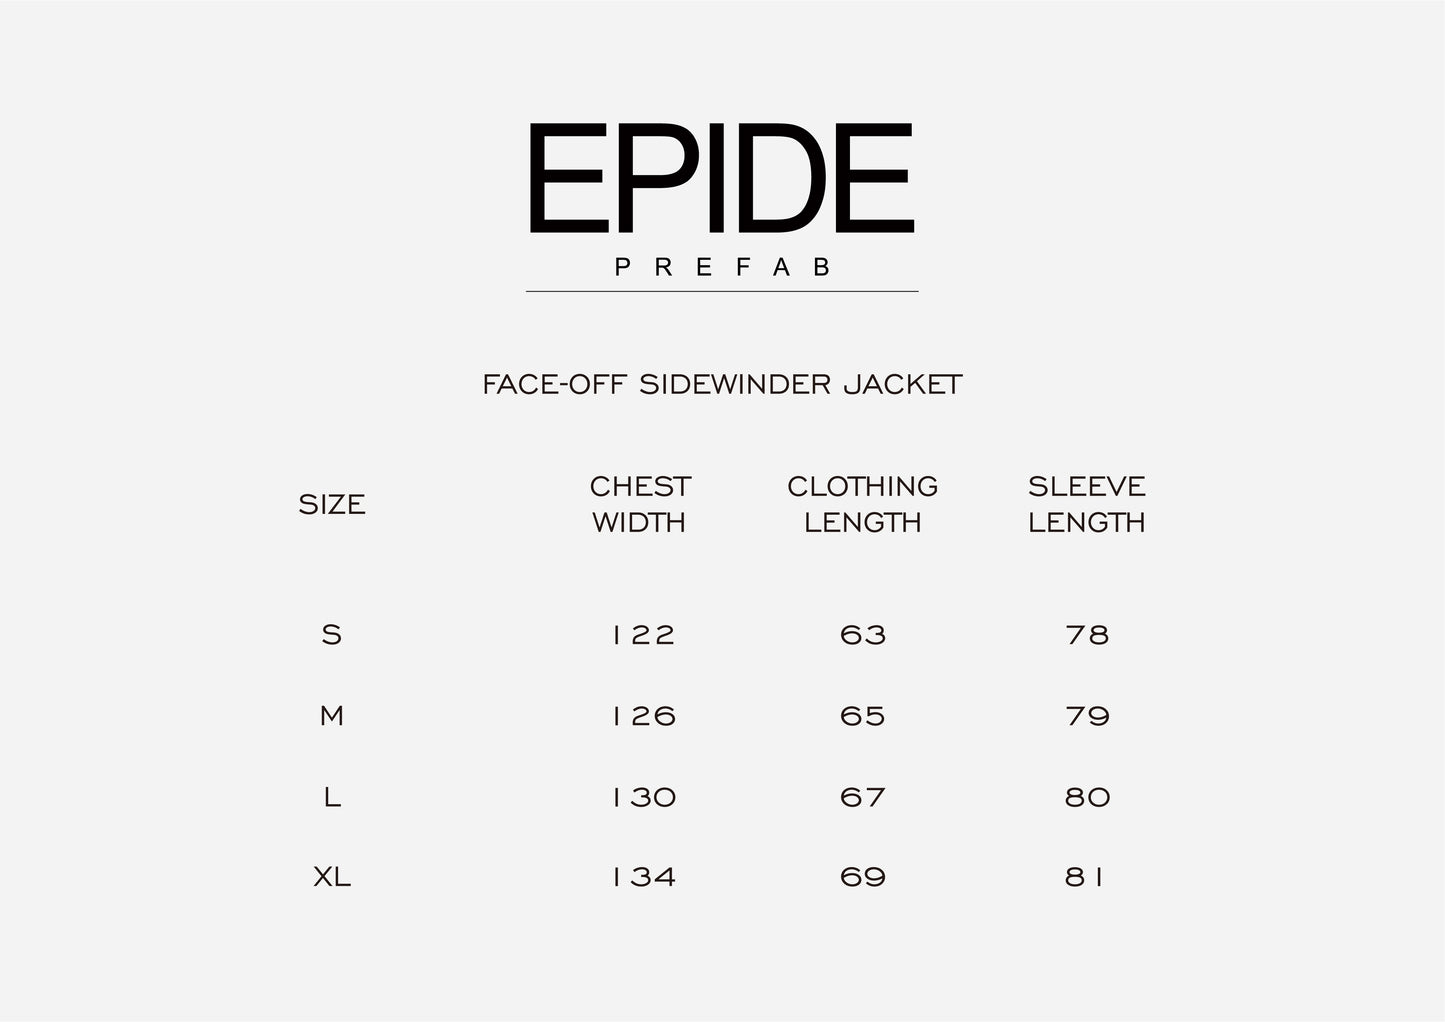 Face-Off Sidewinder Jacket